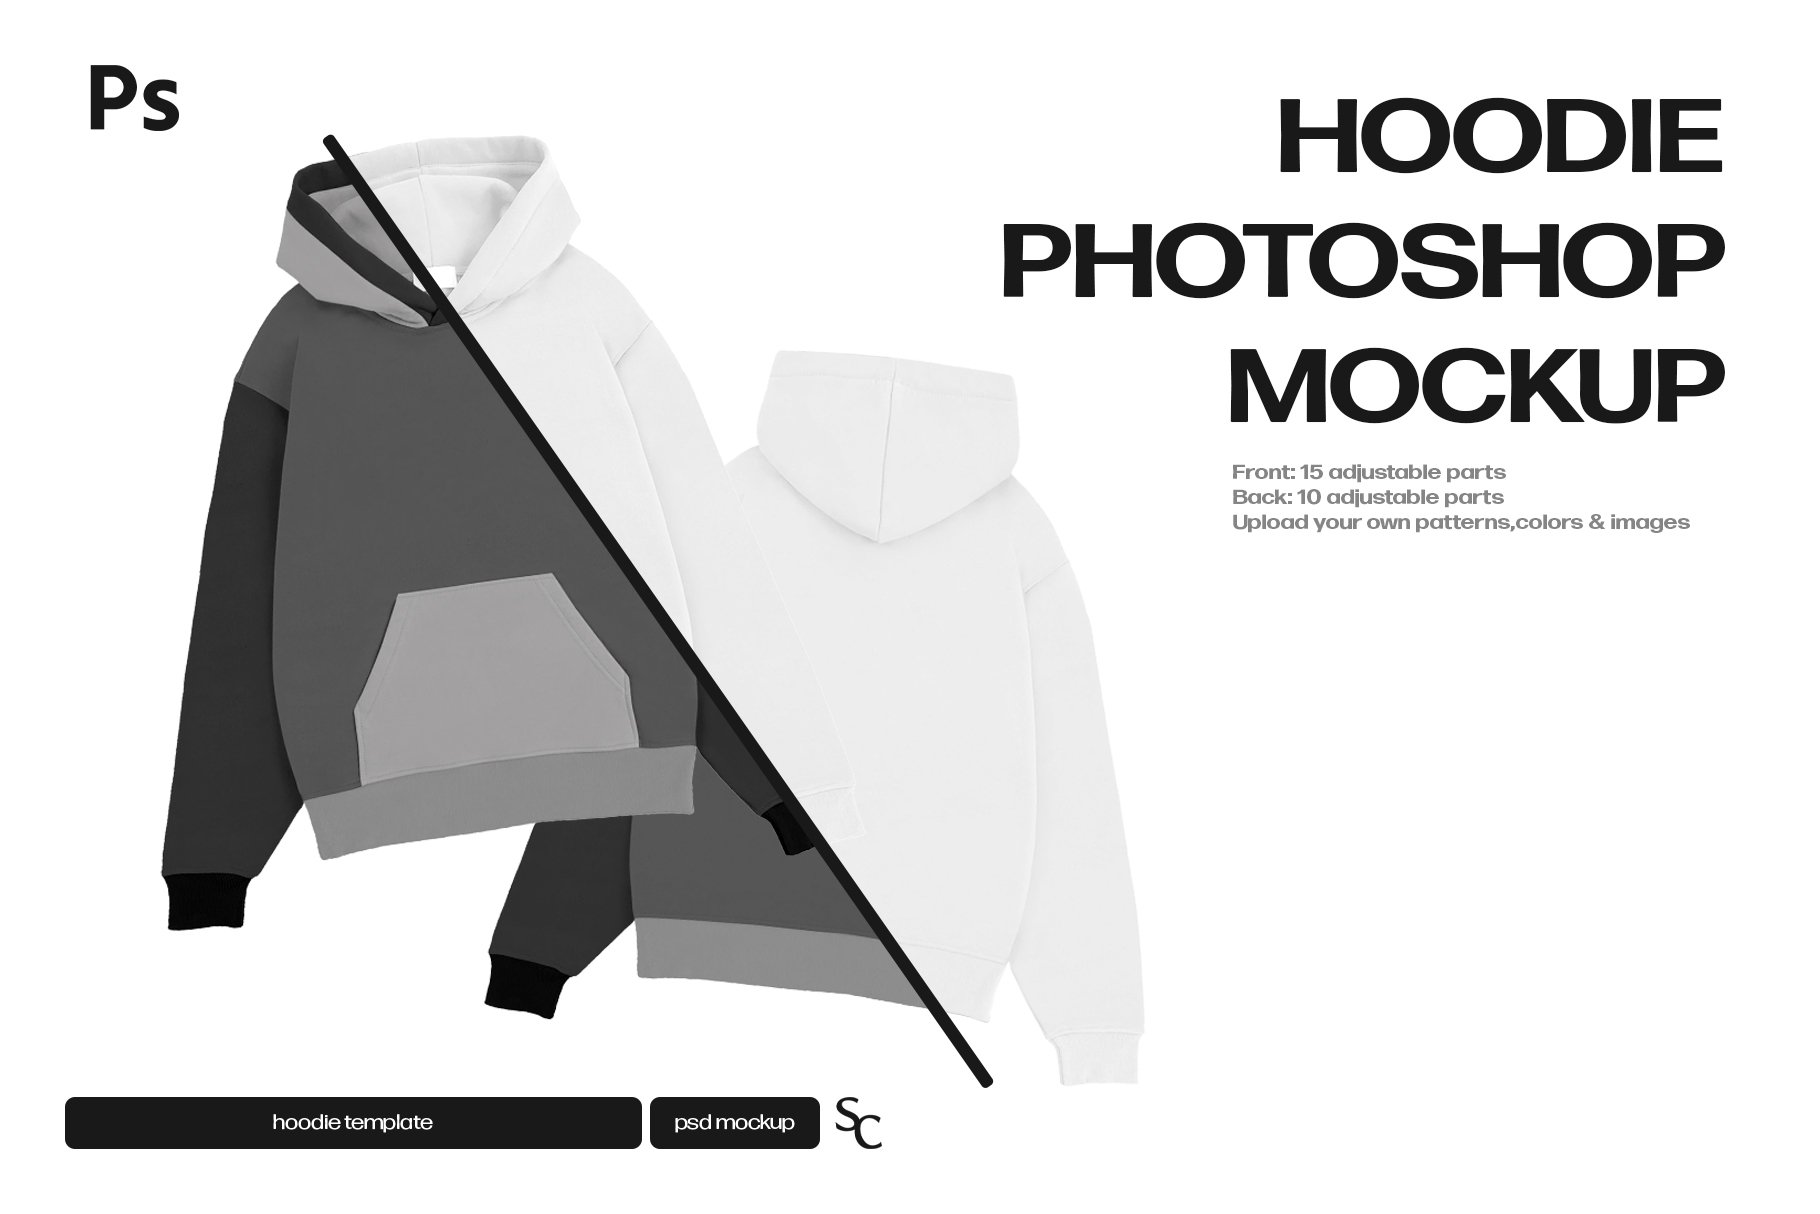 Hoodie Photoshop Mockup cover image.